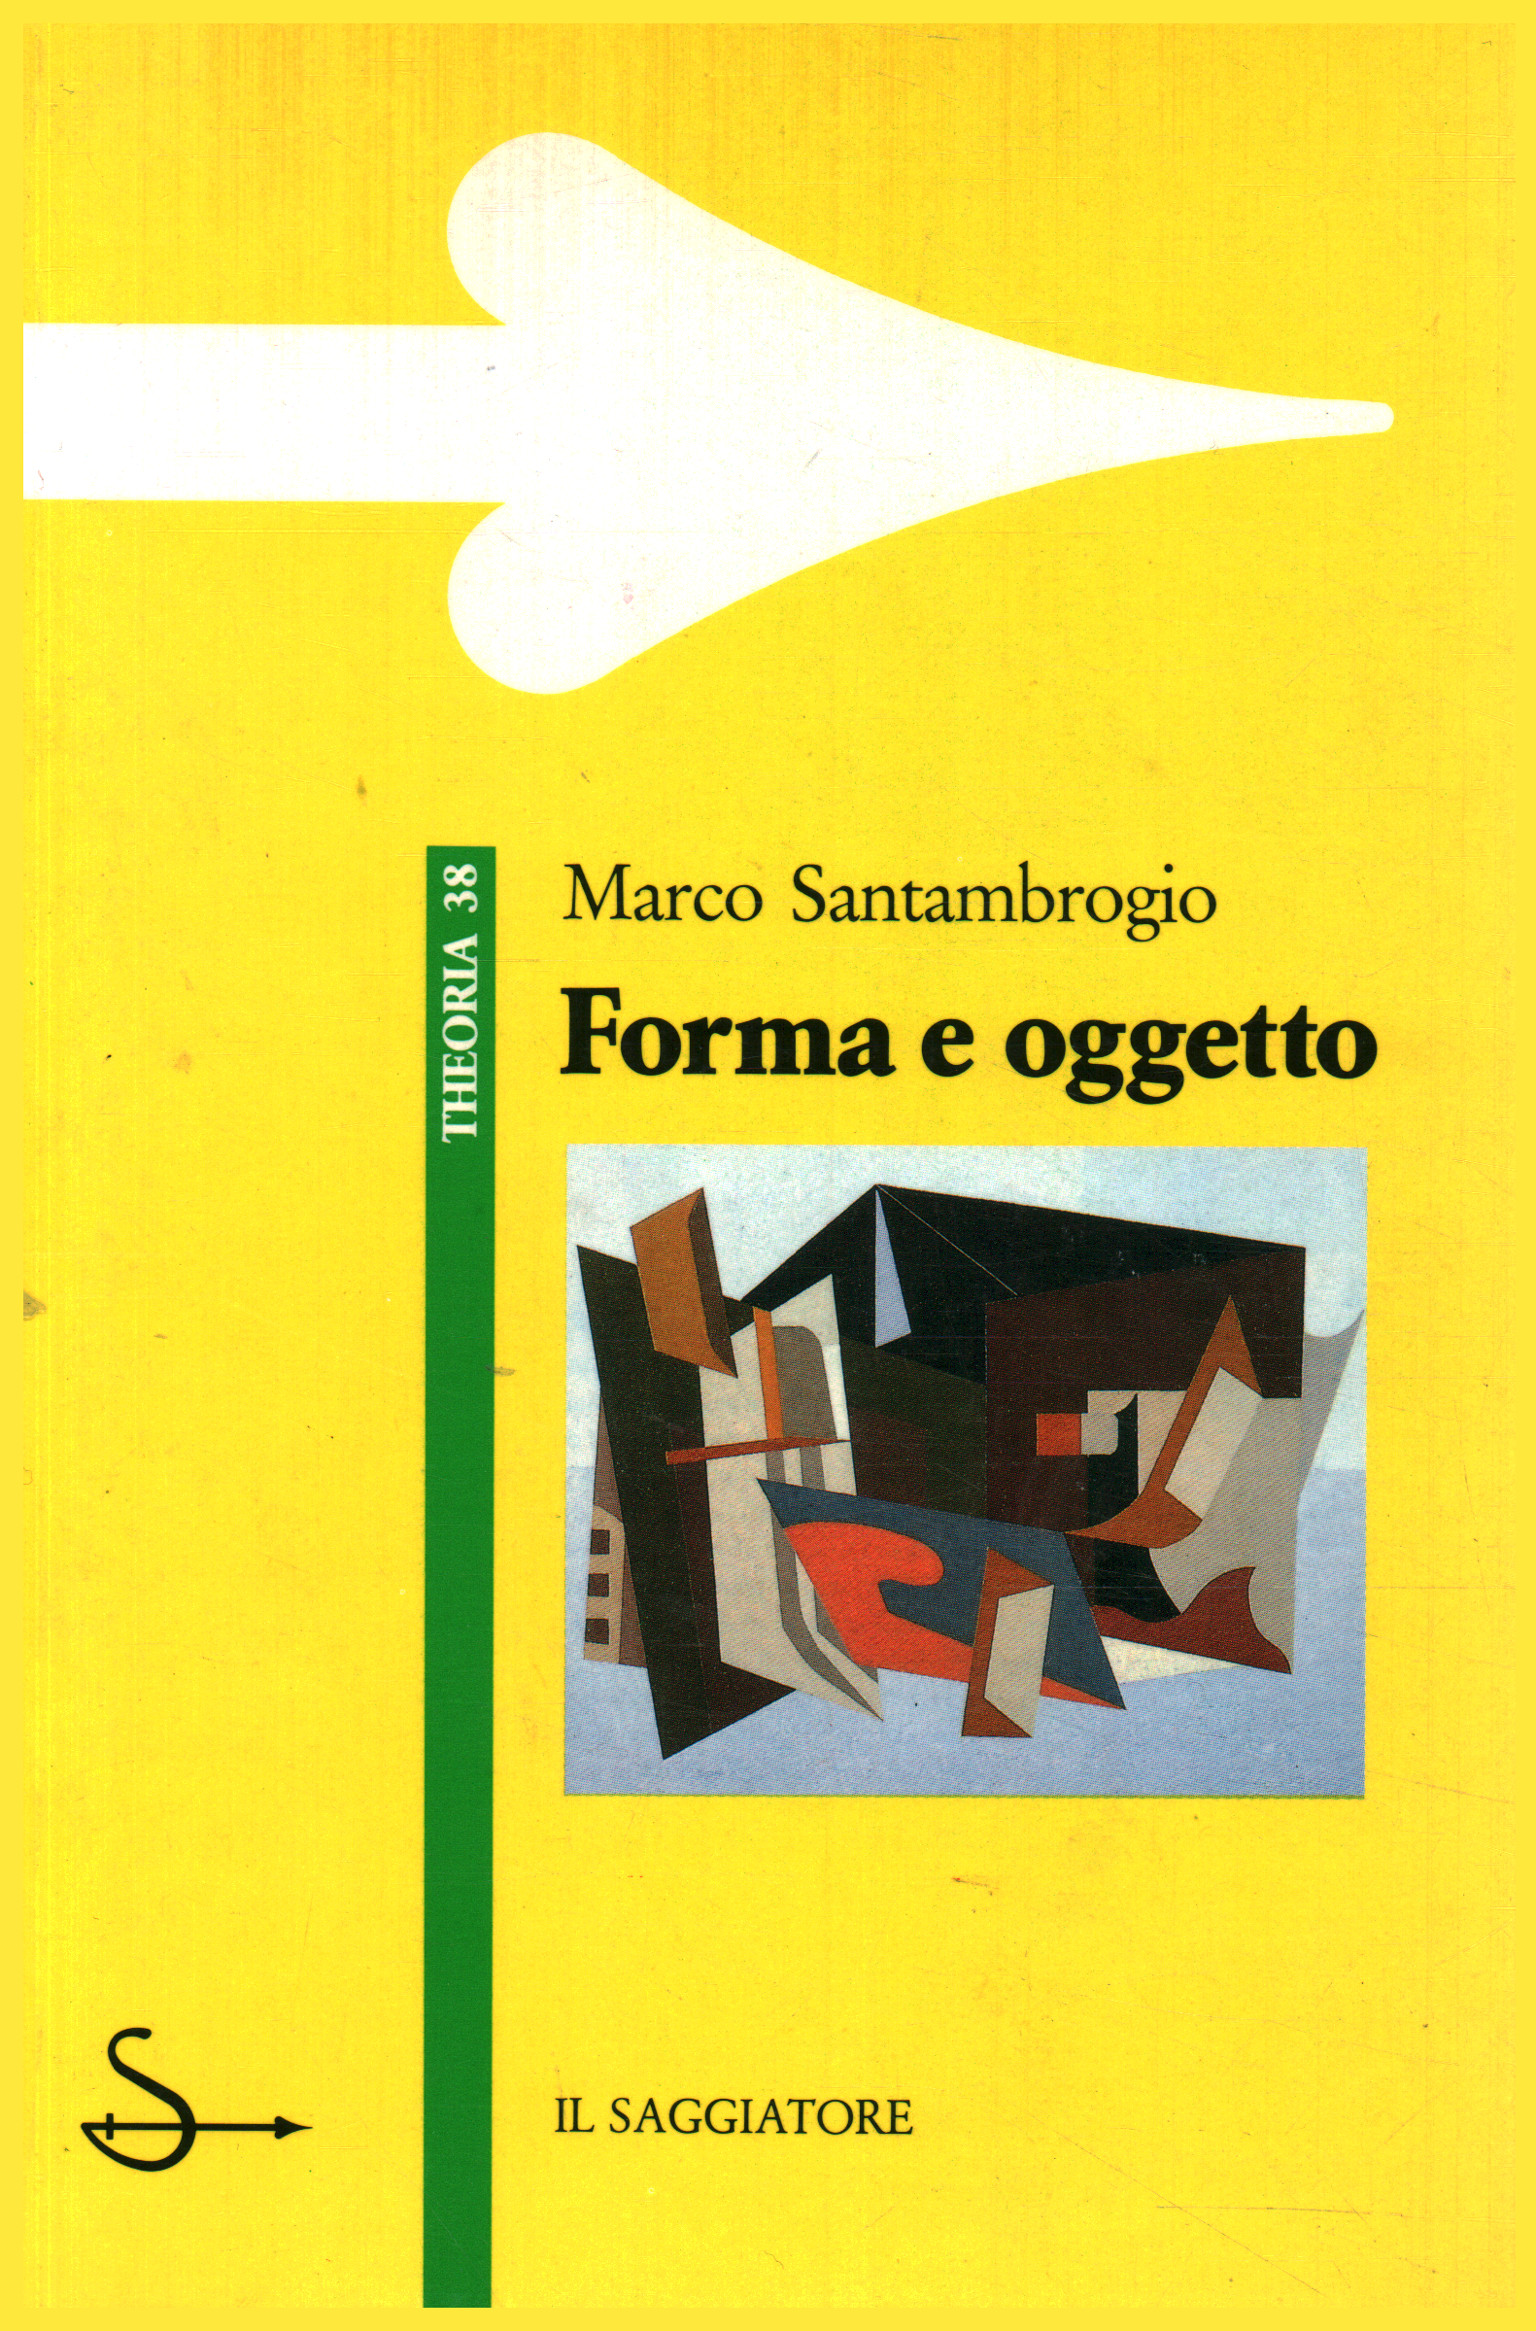 Form and object, Marco Santambrogio